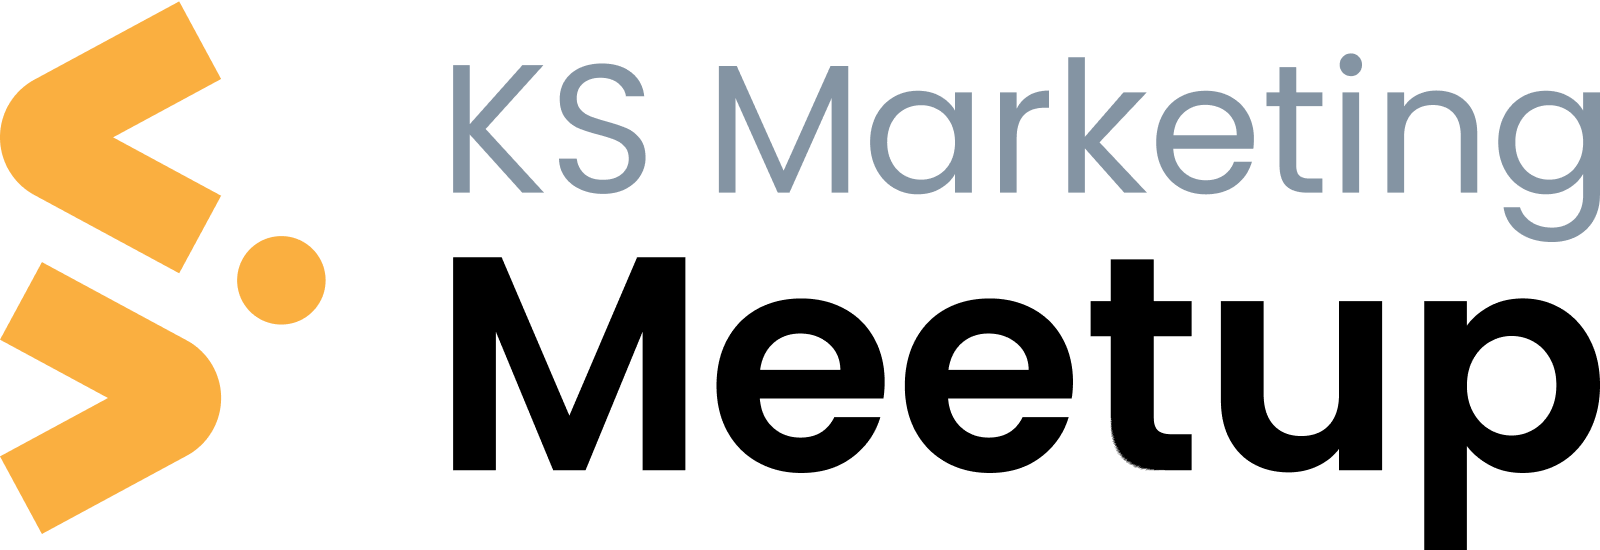 logo KS Marketing Meetup